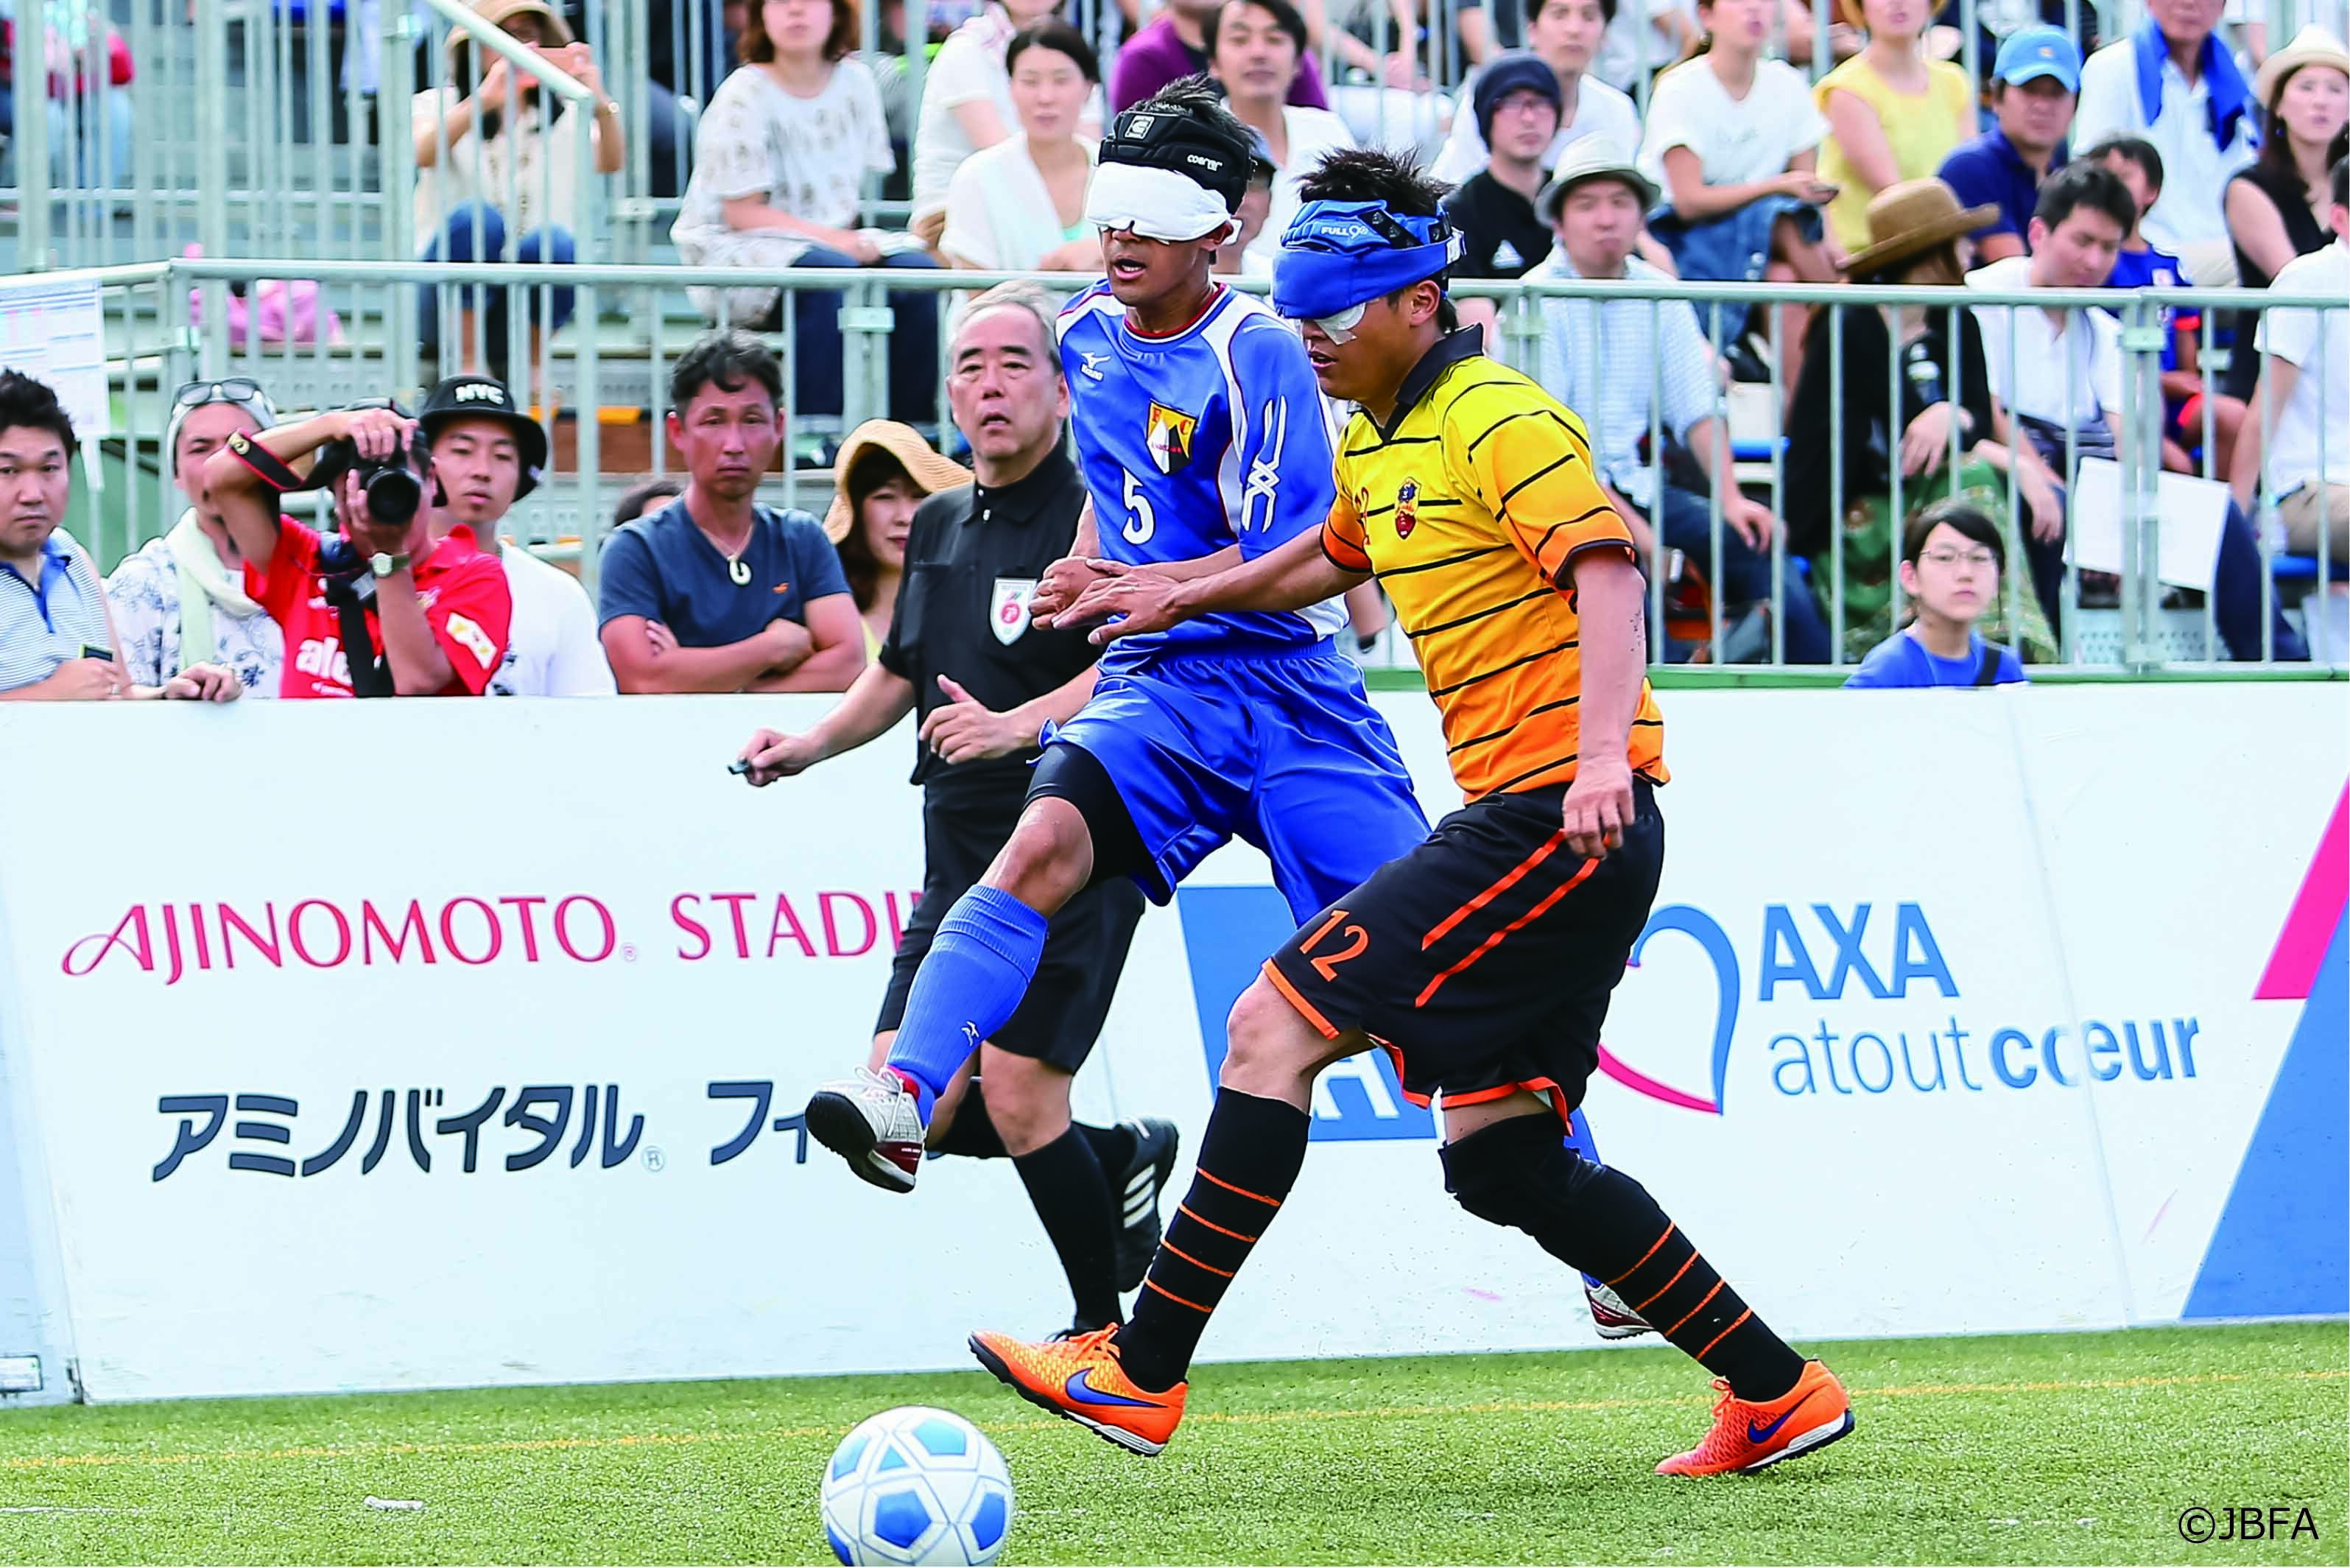 Npo法人日本ブラインドサッカー協会が協力しミャンマーで普及活動を実施 株式会社ジェイサットコンサルティングのプレスリリース